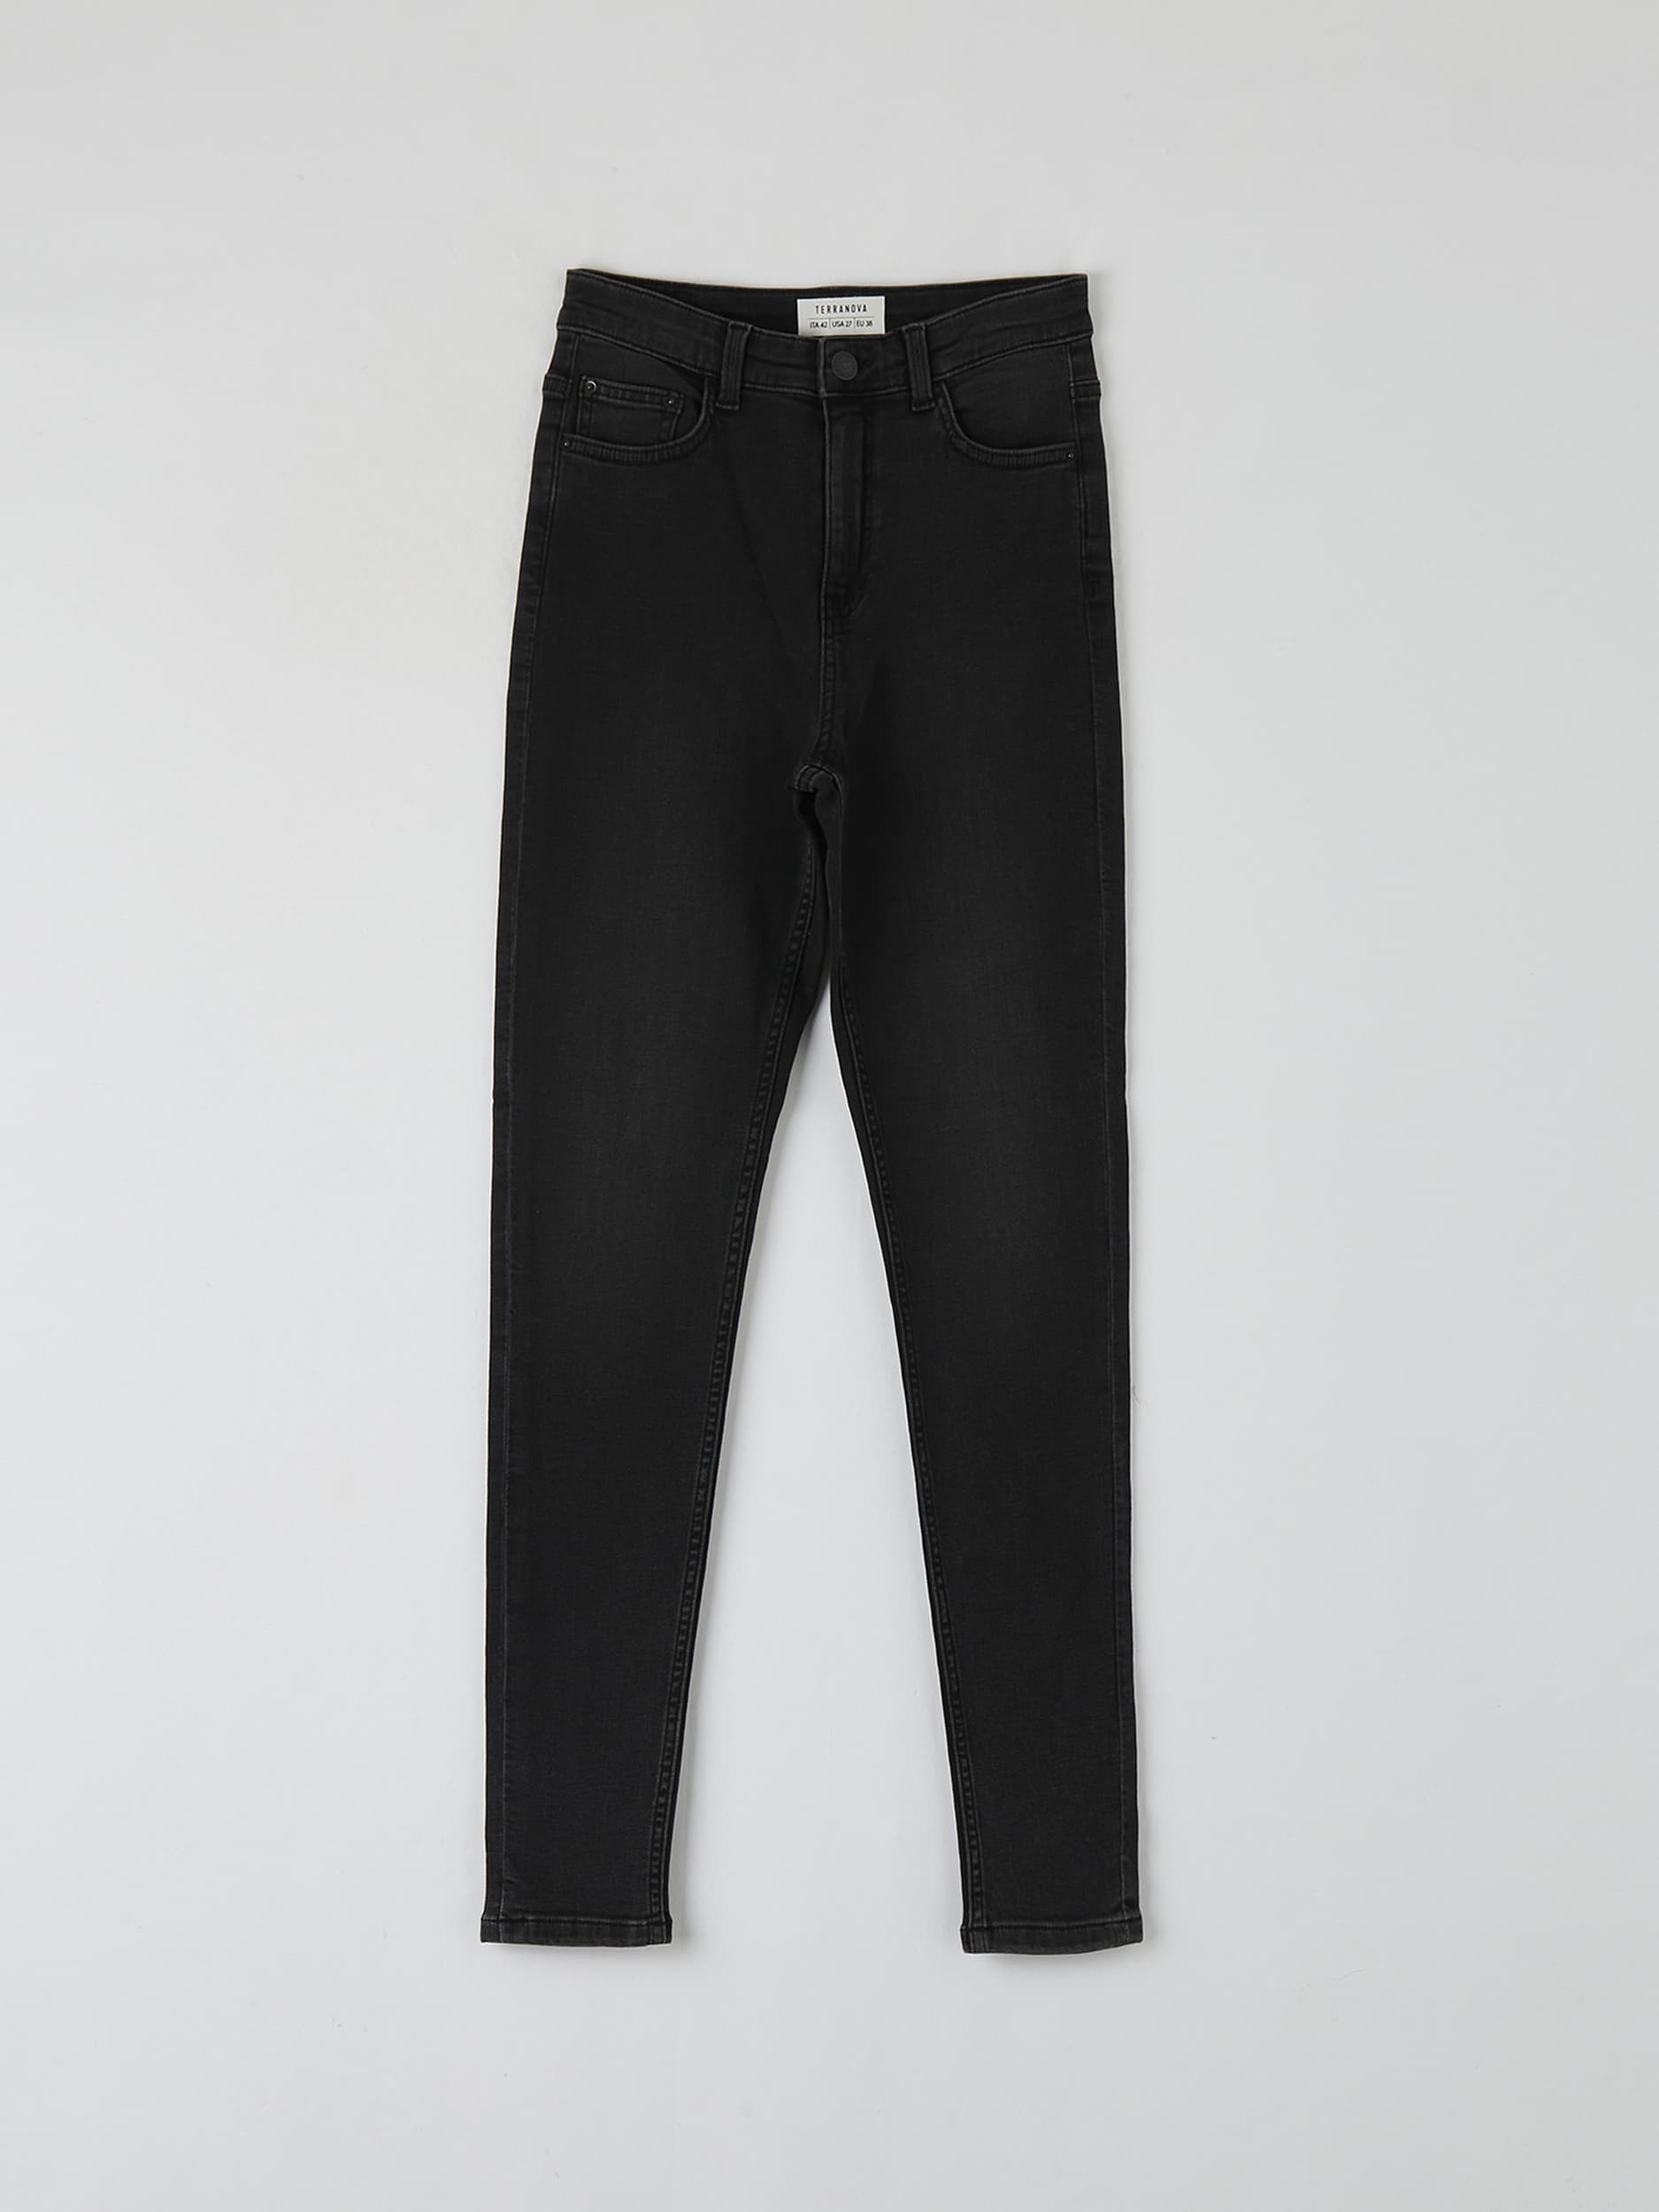 Black high-waisted skinny jeans 